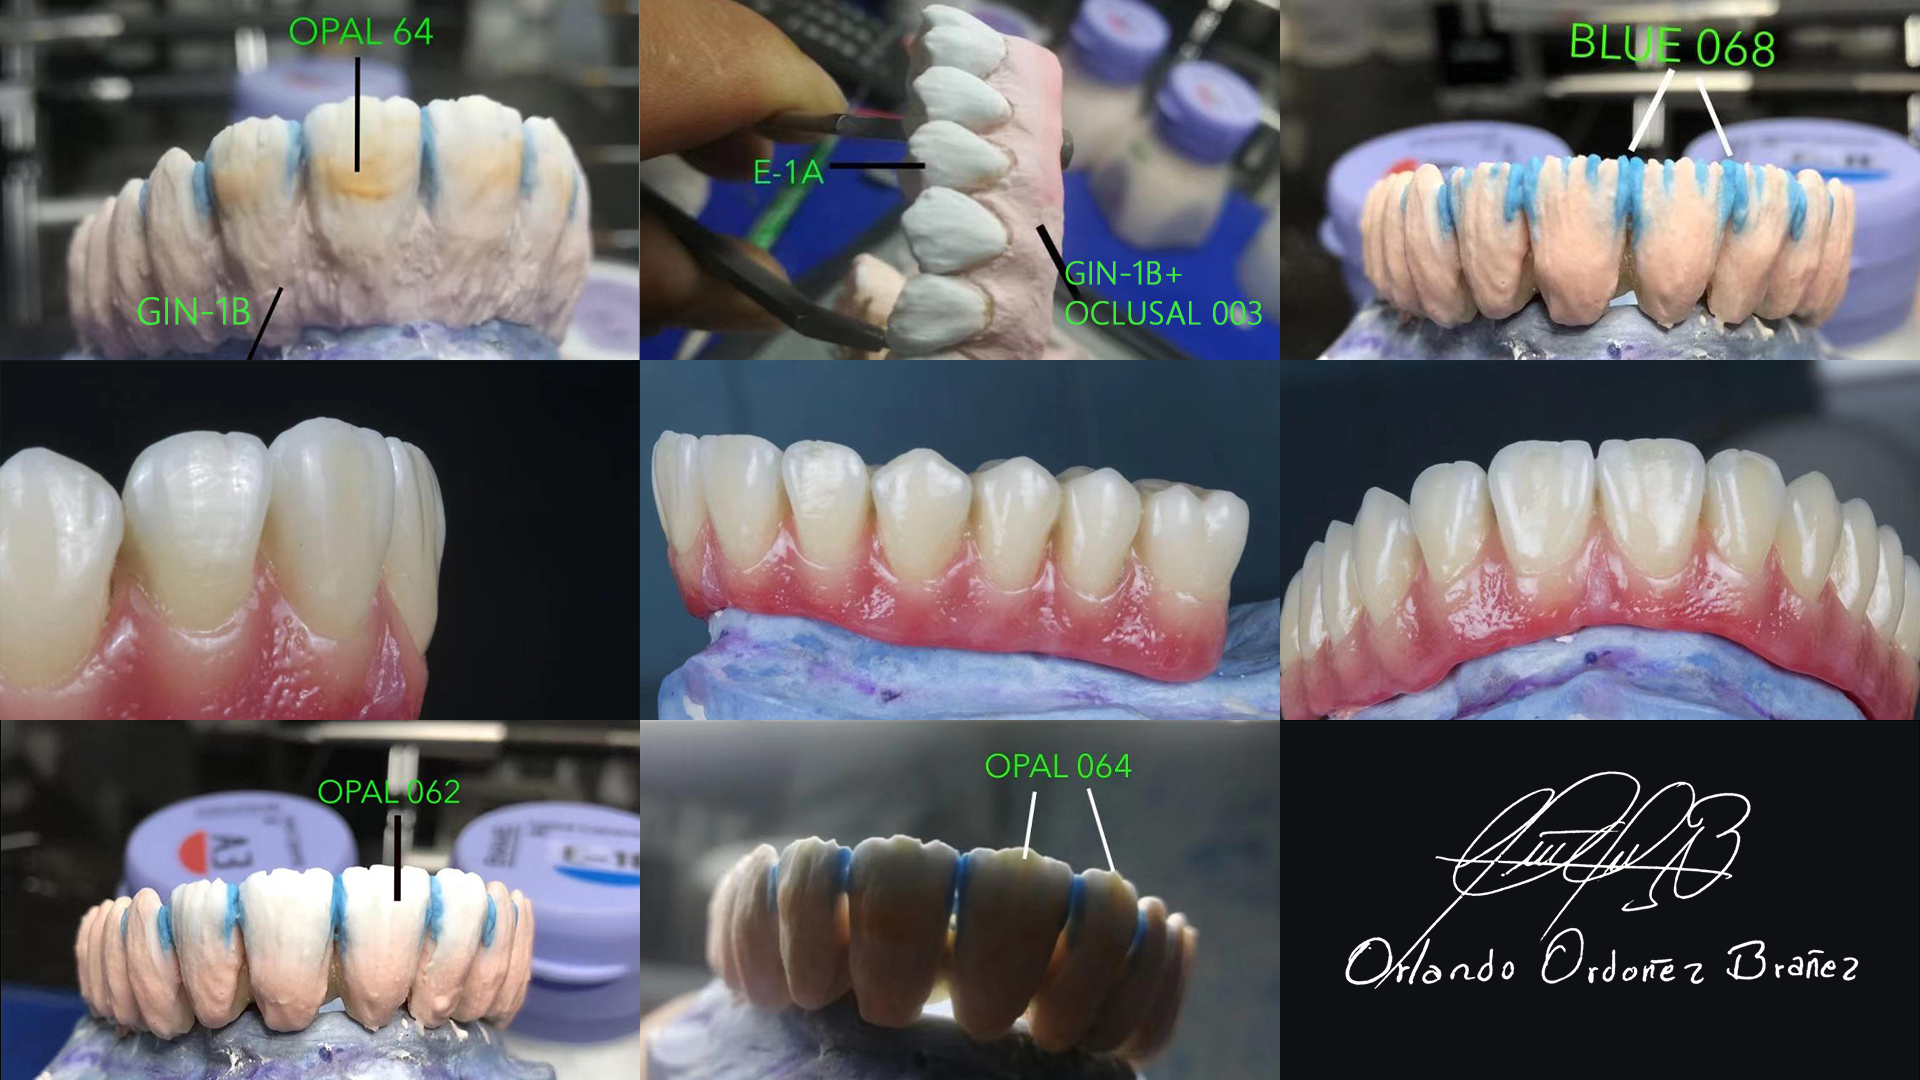 Dental Material Powder for modifier restoration